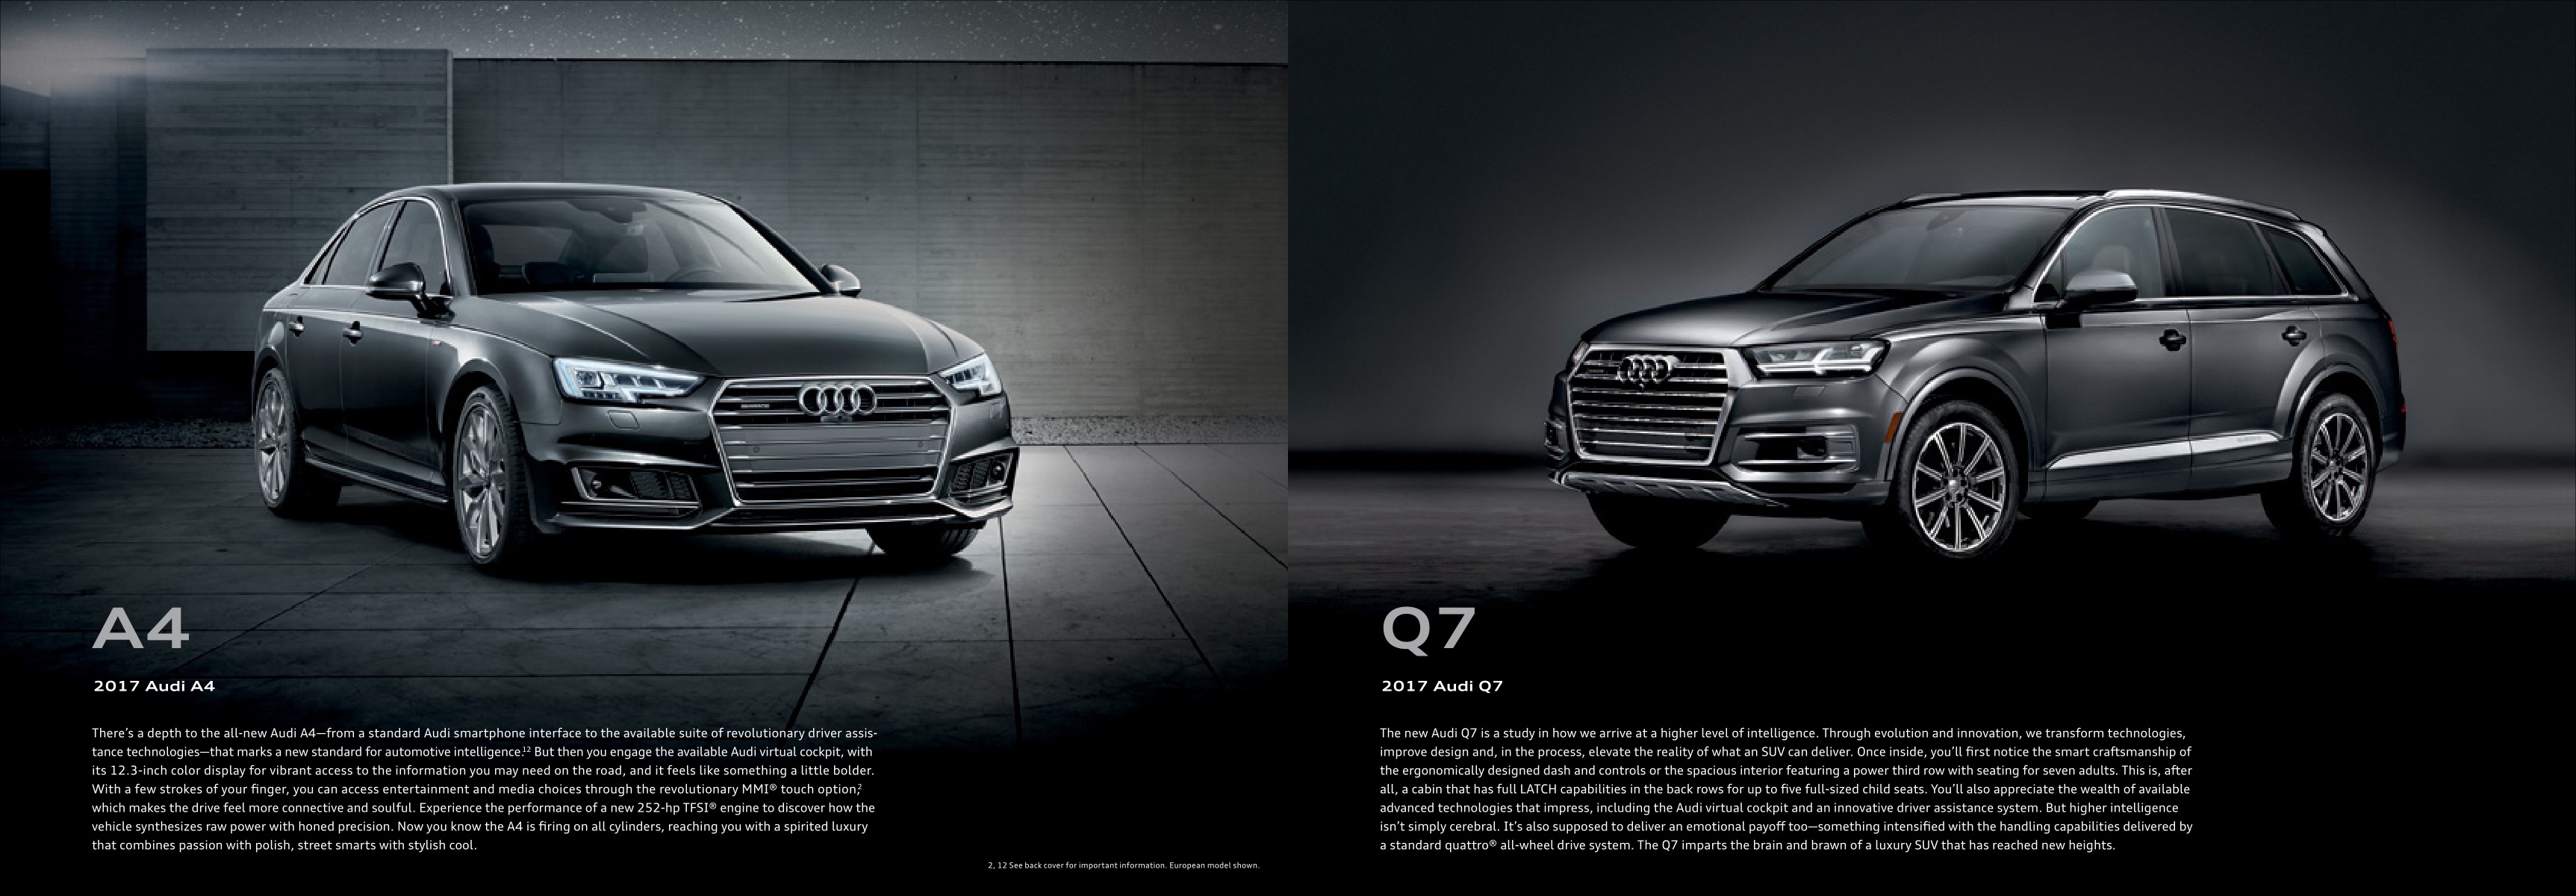 2016 Audi Brochure Page 5